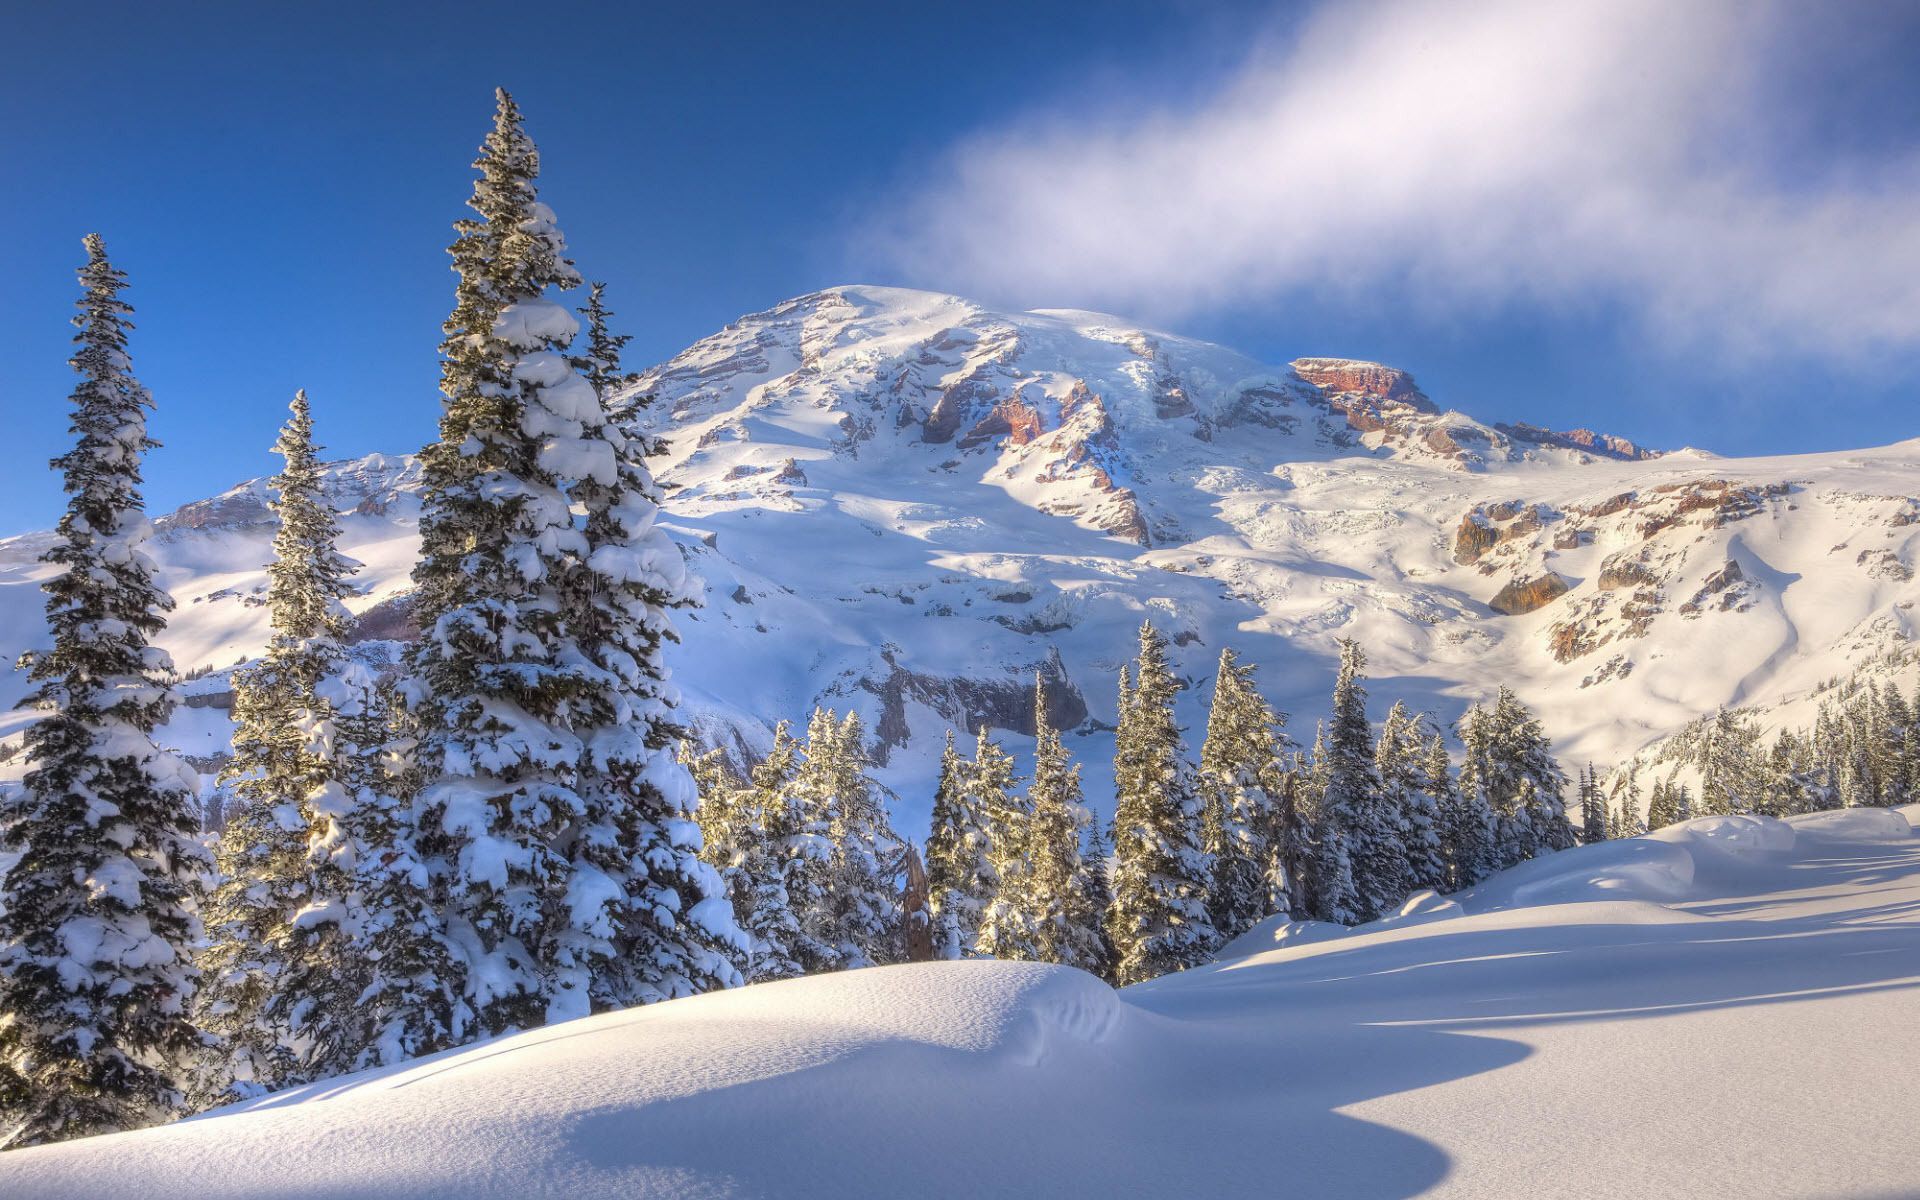 Winter Mountain Background. Winter picture, Winter landscape, Mountain scene